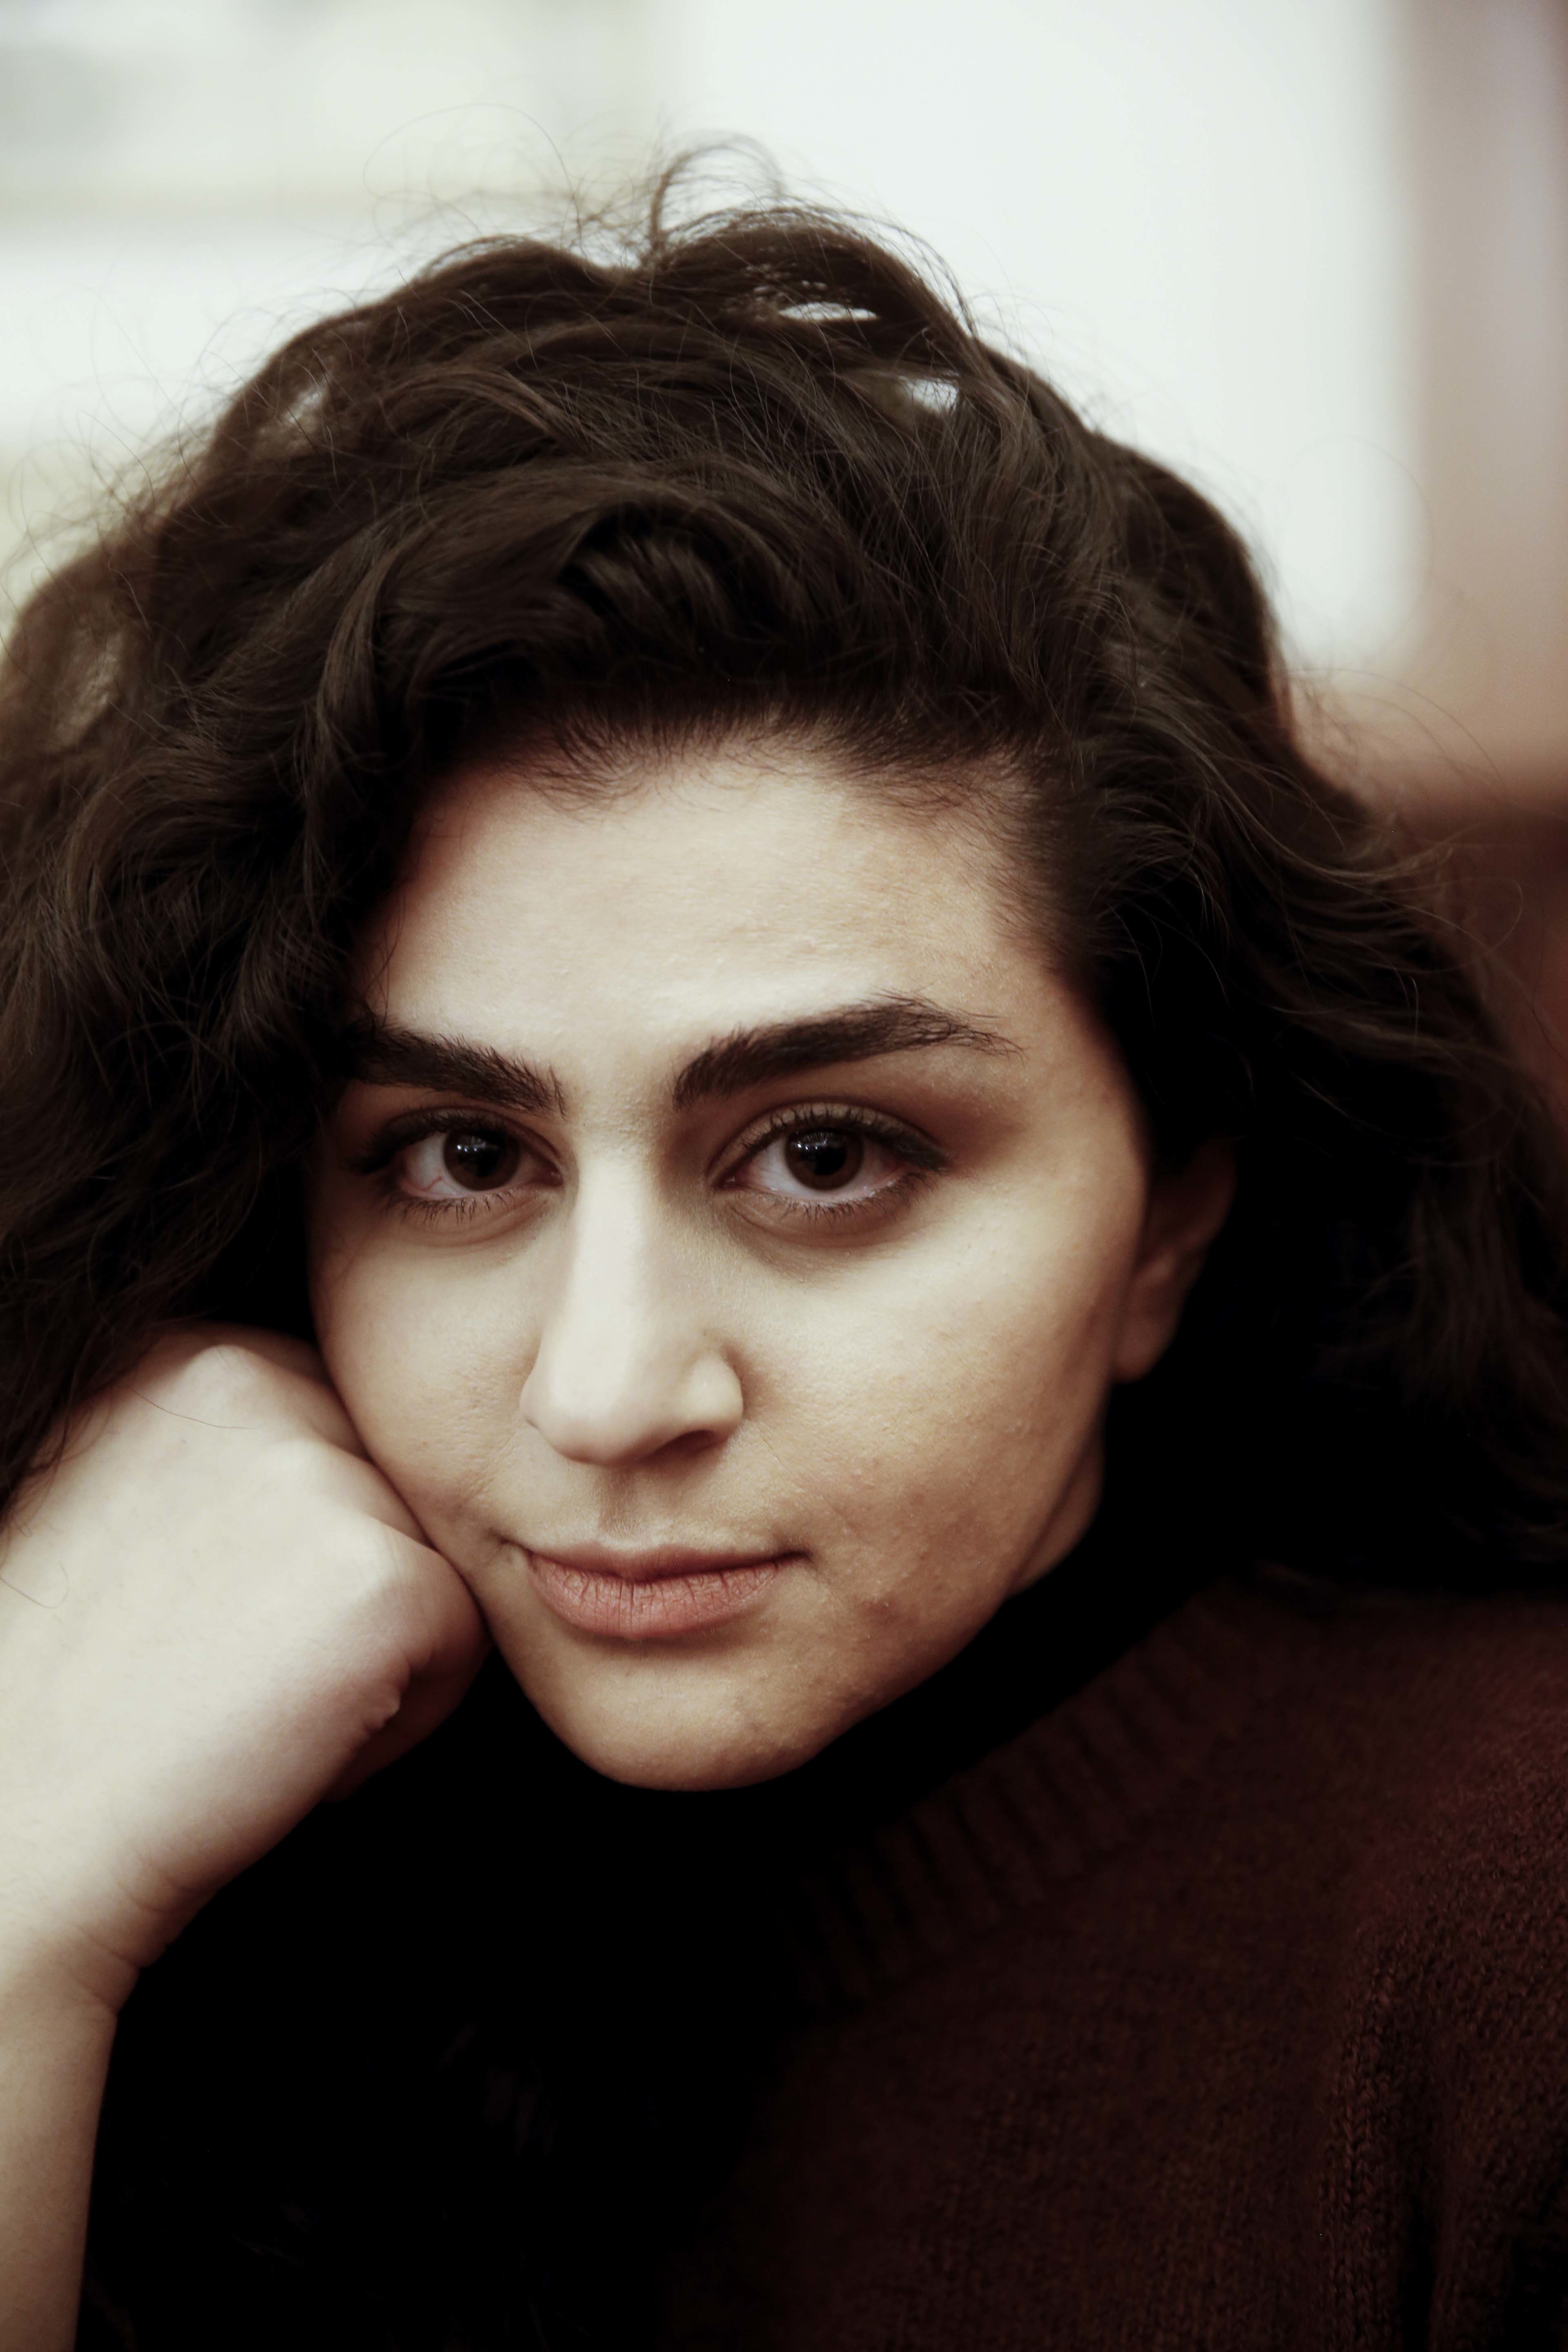 Sofia Nesrine Srour, "De skamløse jentene"